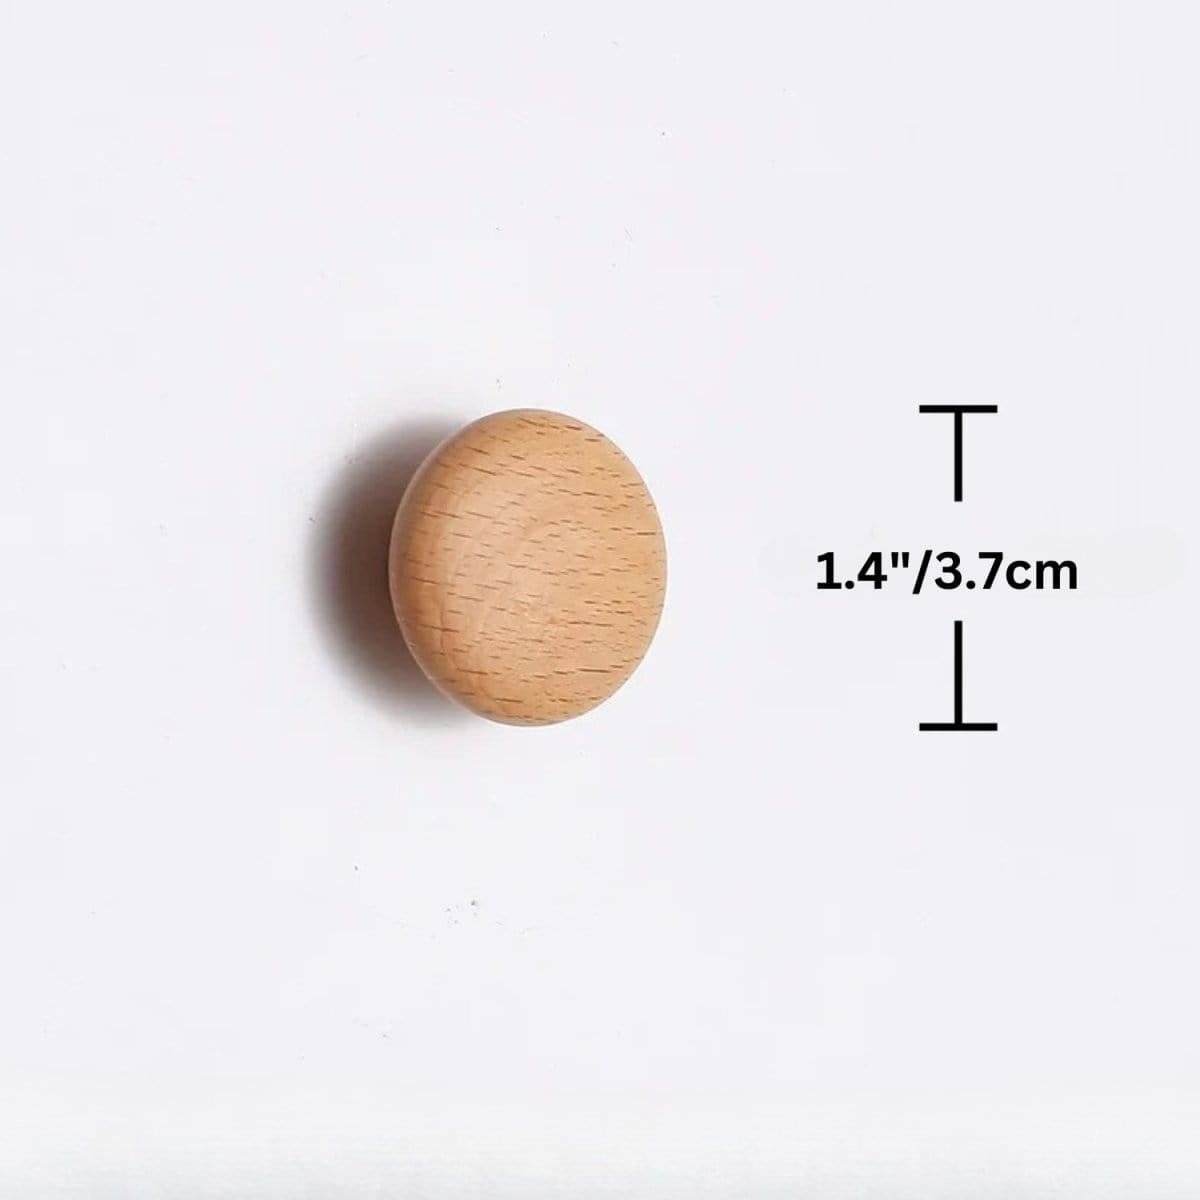 Residence Supply Knob: 1.4" / 3.7cm Drevo Drawer Pull